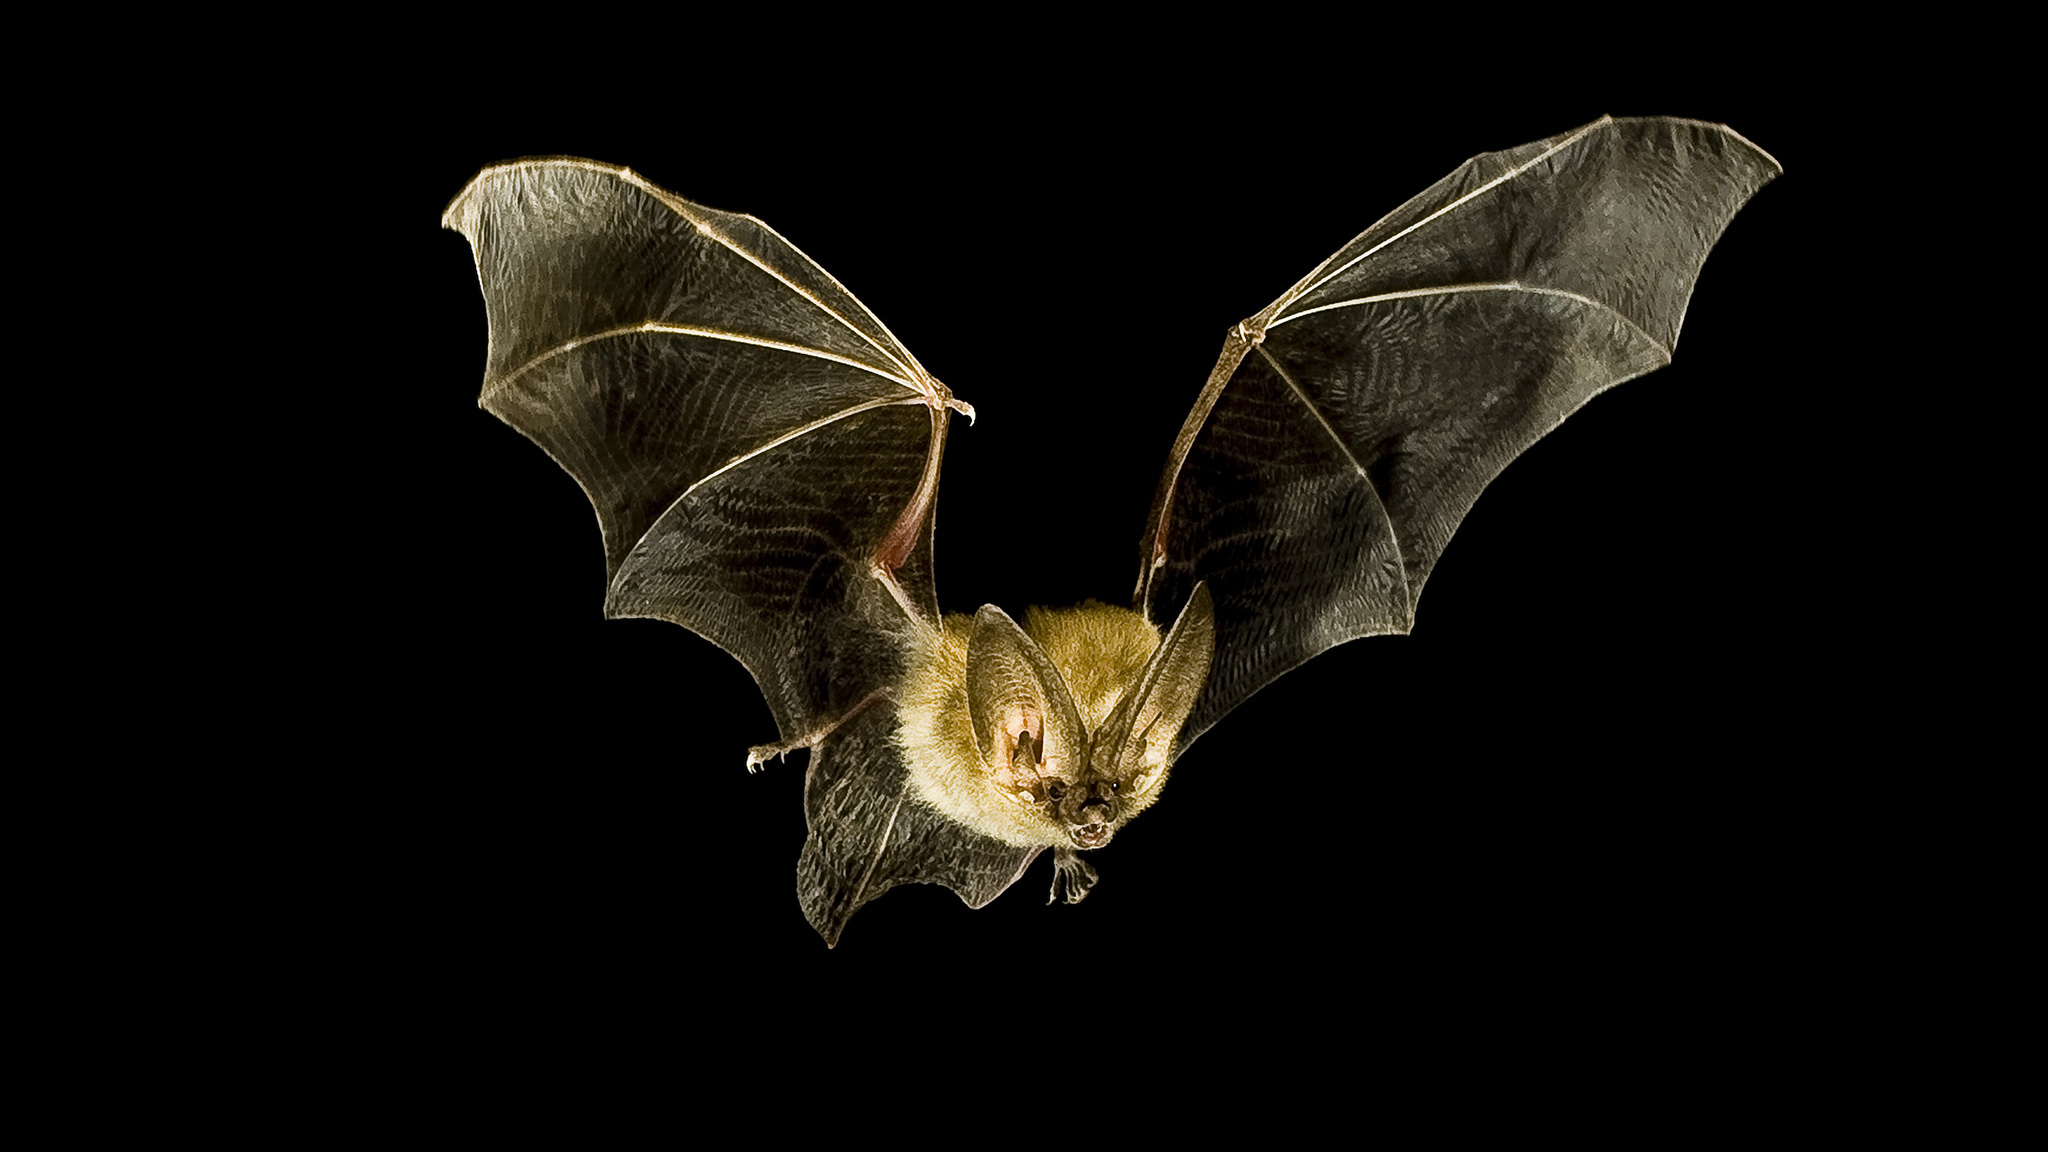 Bat wallpapers, High-resolution images, Stunning backgrounds, Wildlife photography, 2050x1160 HD Desktop